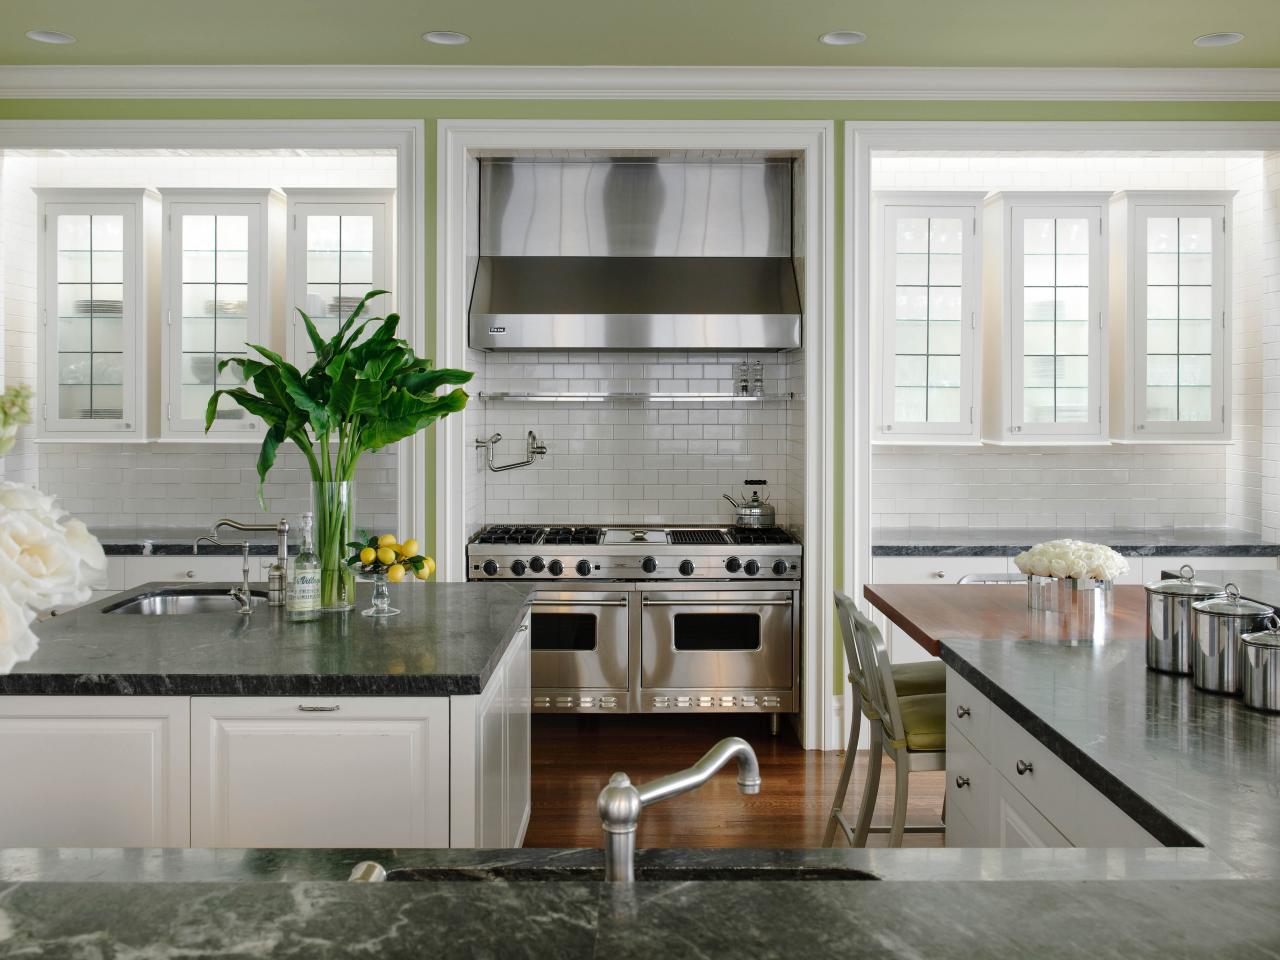 DP_Kendall-Wilkinson-white-contemporary-kitchen_h.jpg.rend.hgtvcom.1280.960.jpeg